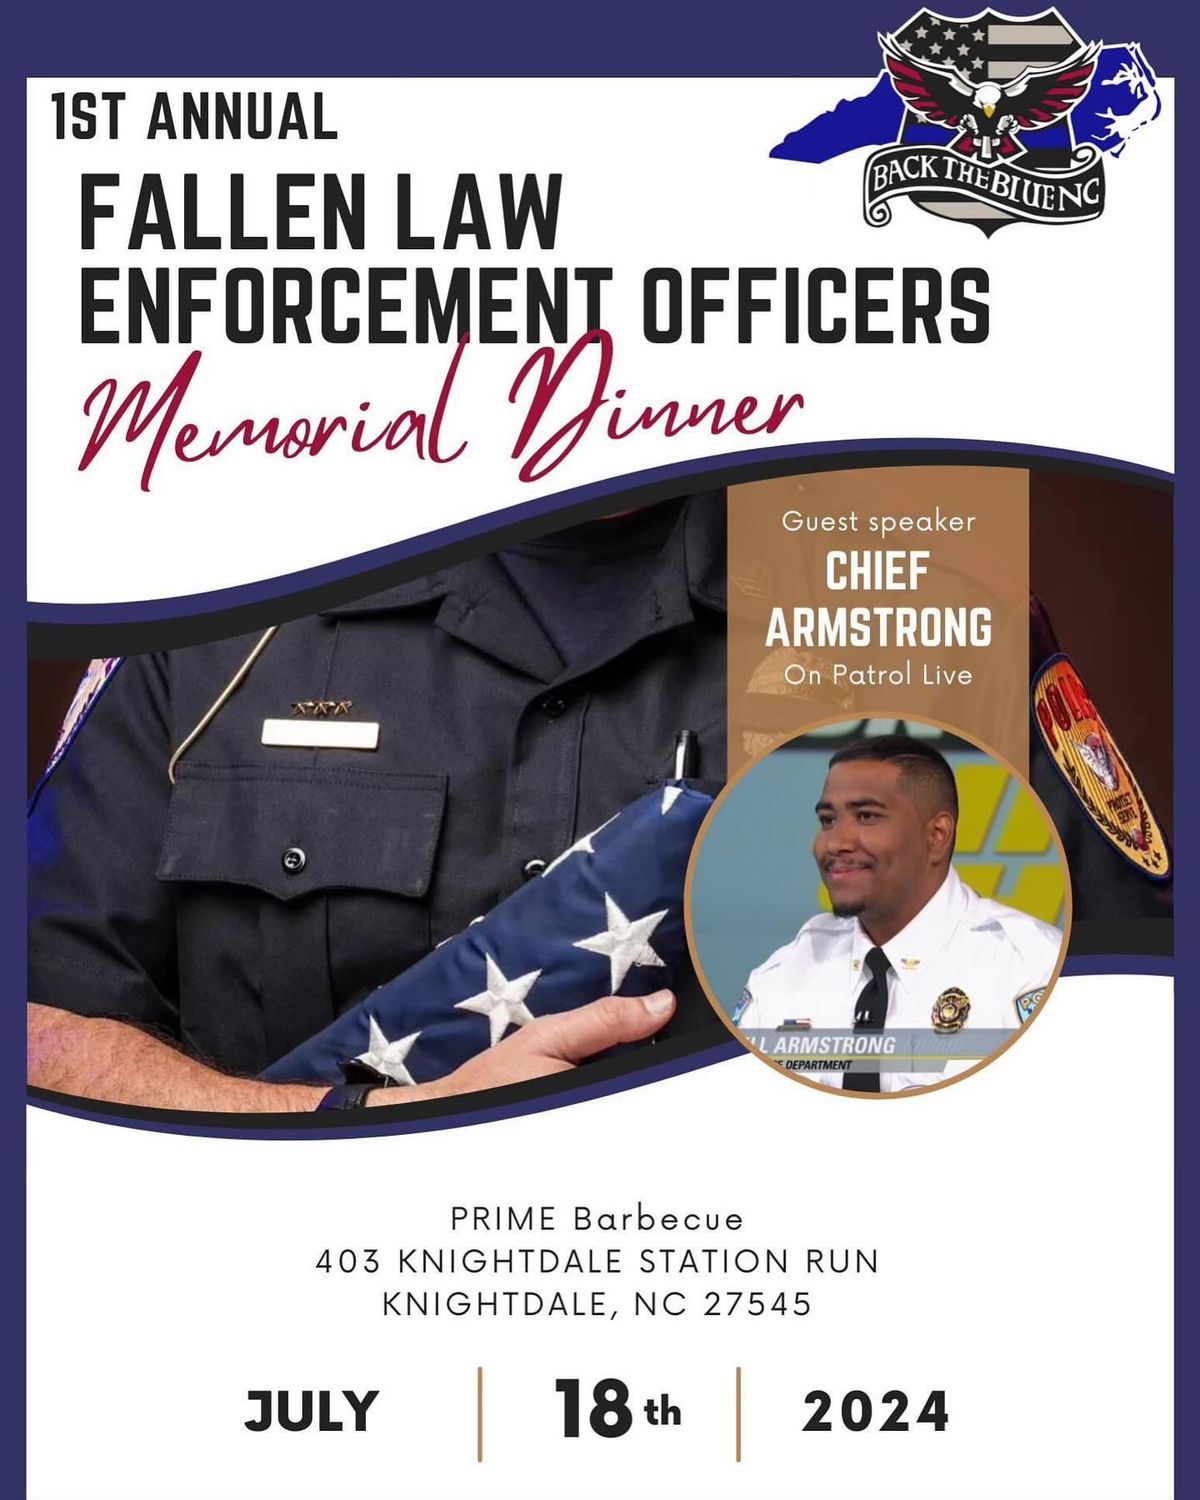 Back The Blue NC, Inc.'s First Annual Fallen Law Enforcement Memorial Dinner